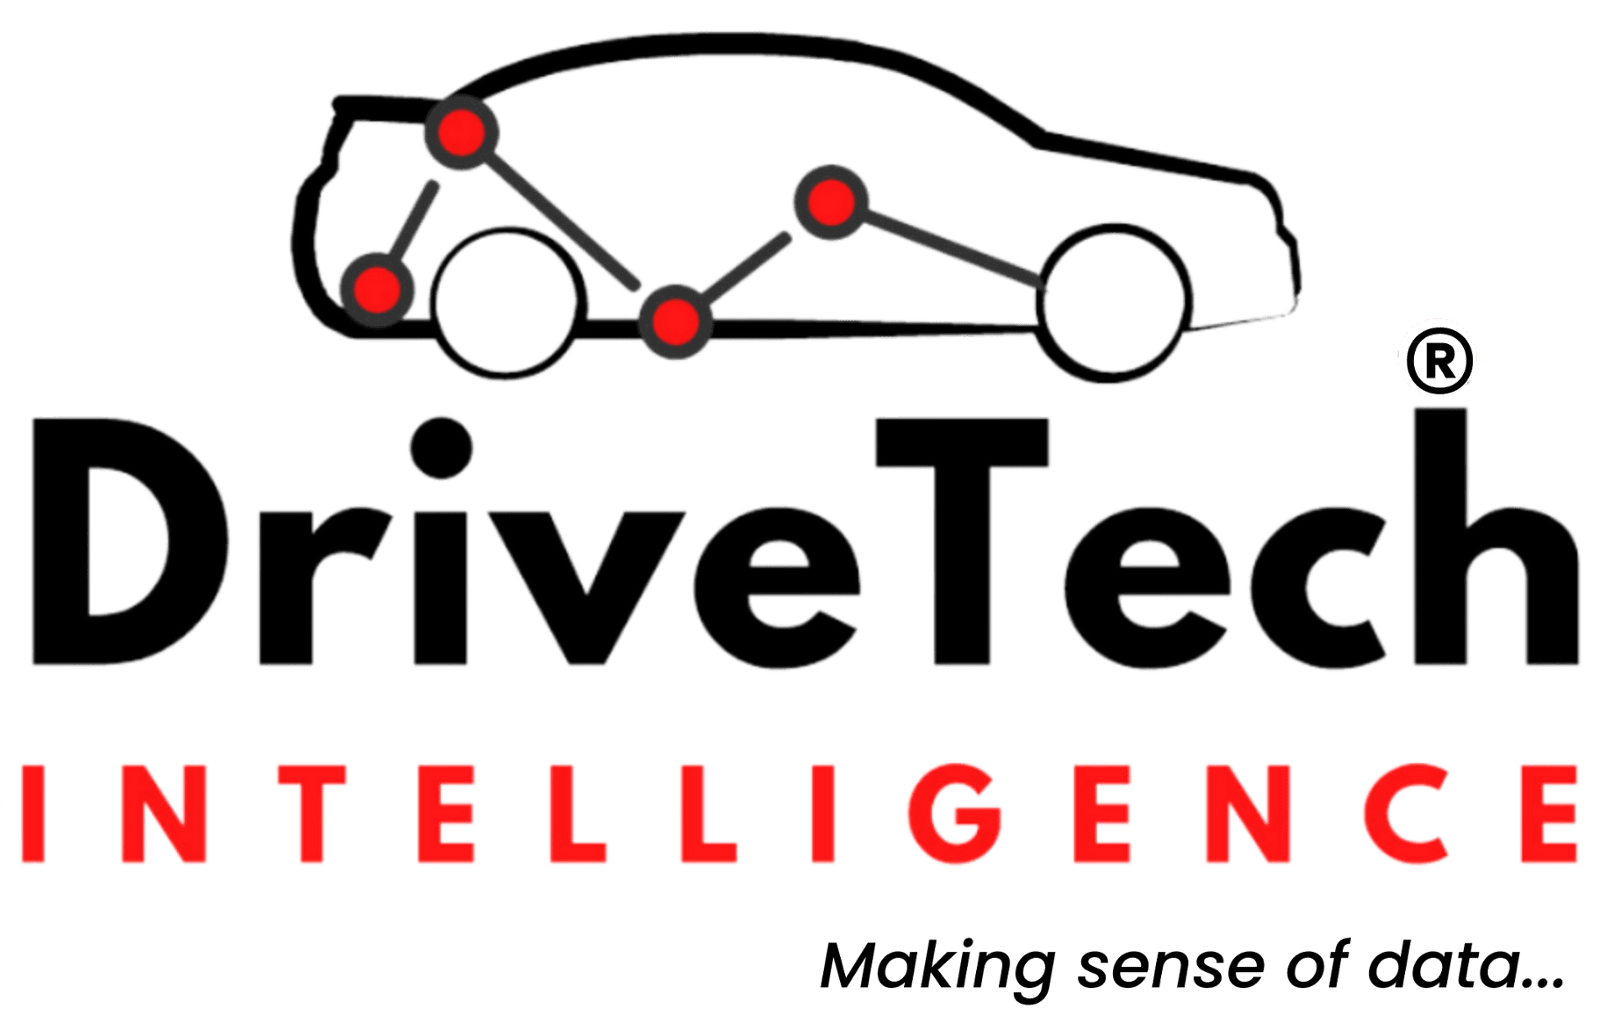 Drivetech